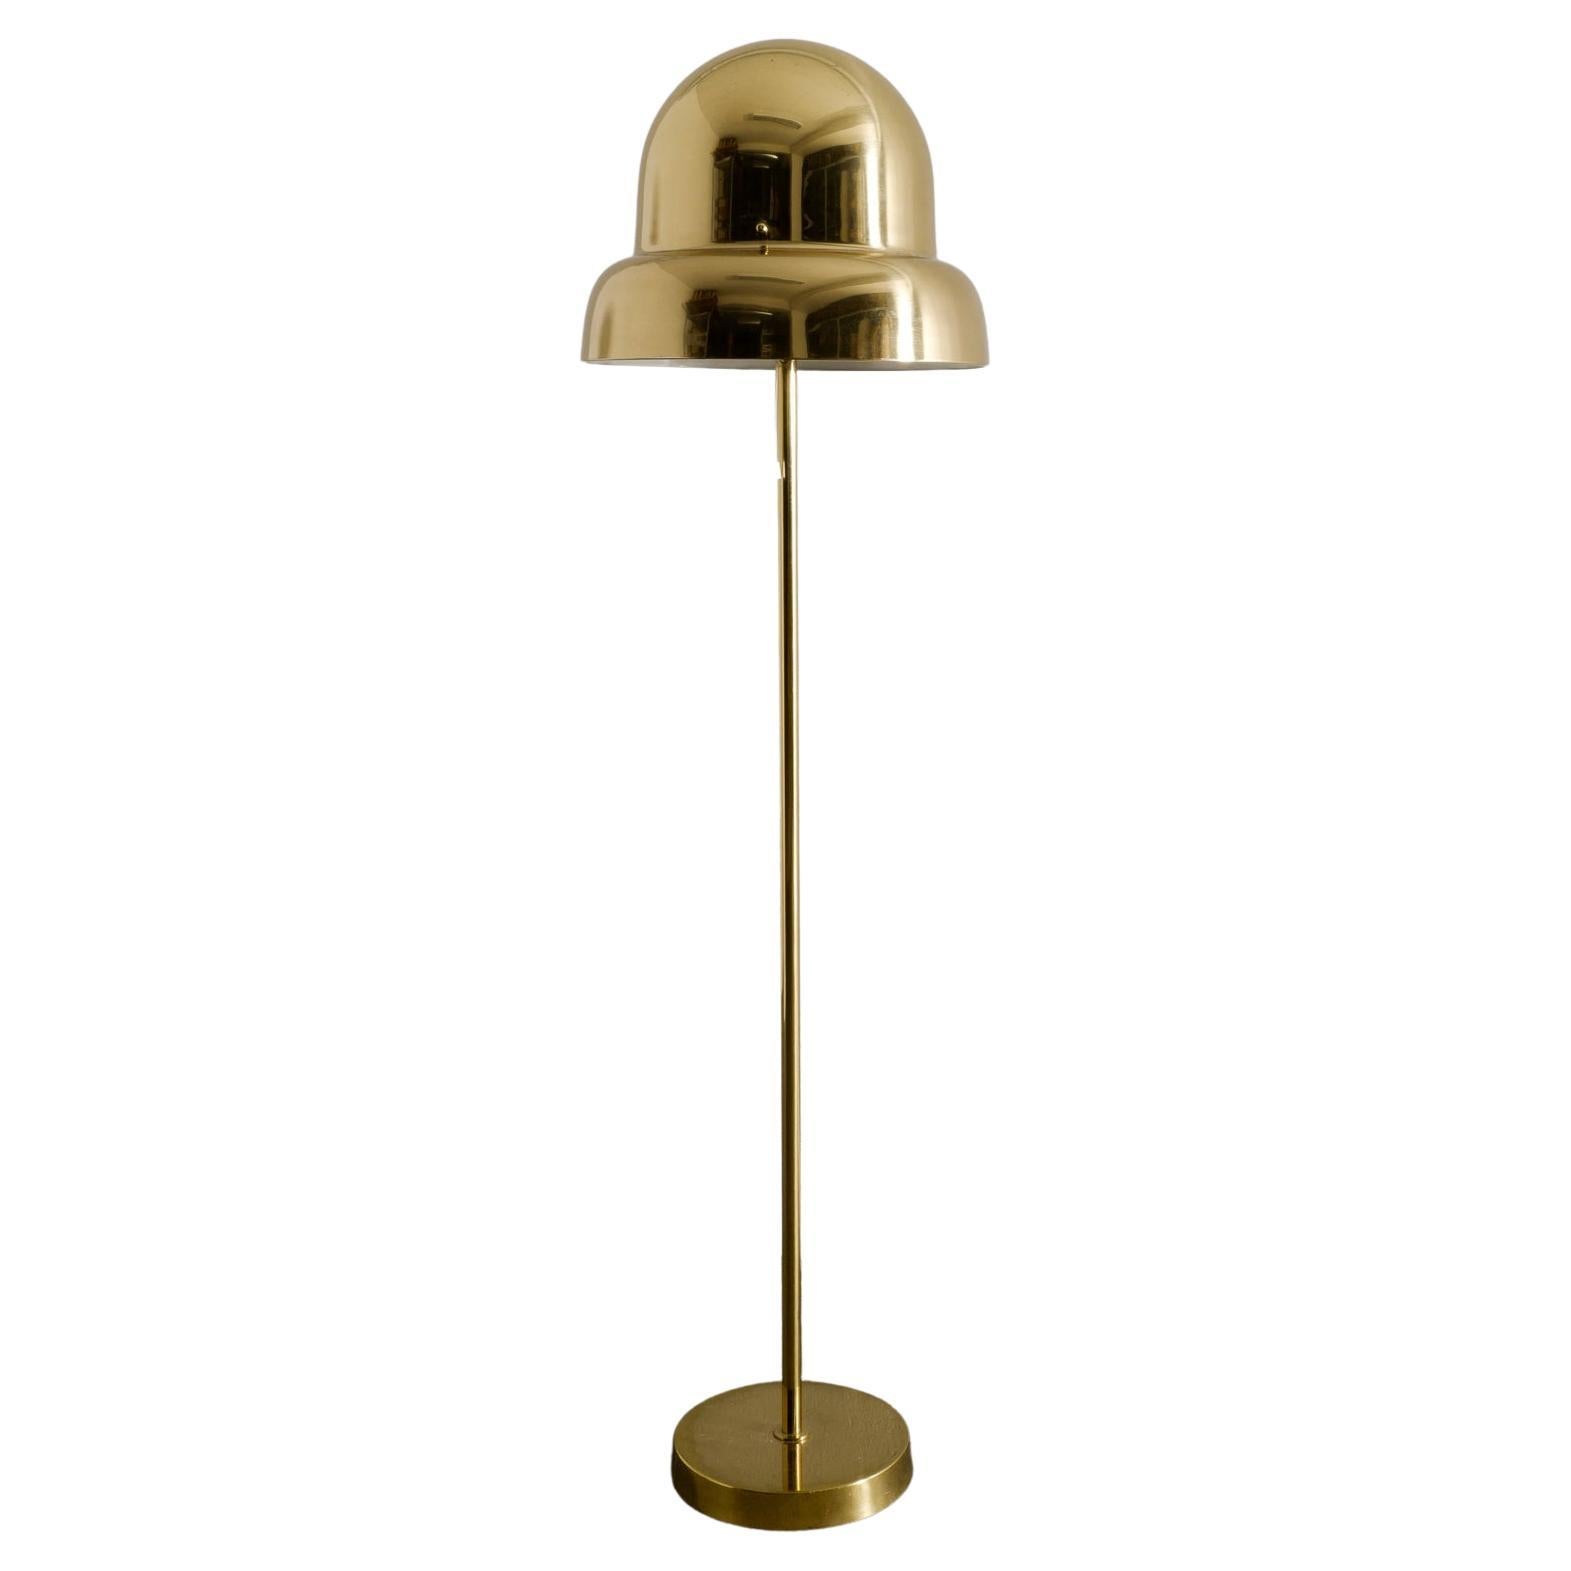 Midcentury "G-125" Floor Lamp in Brass by Eje Ahlgren for Bergboms Sweden, 1960s For Sale